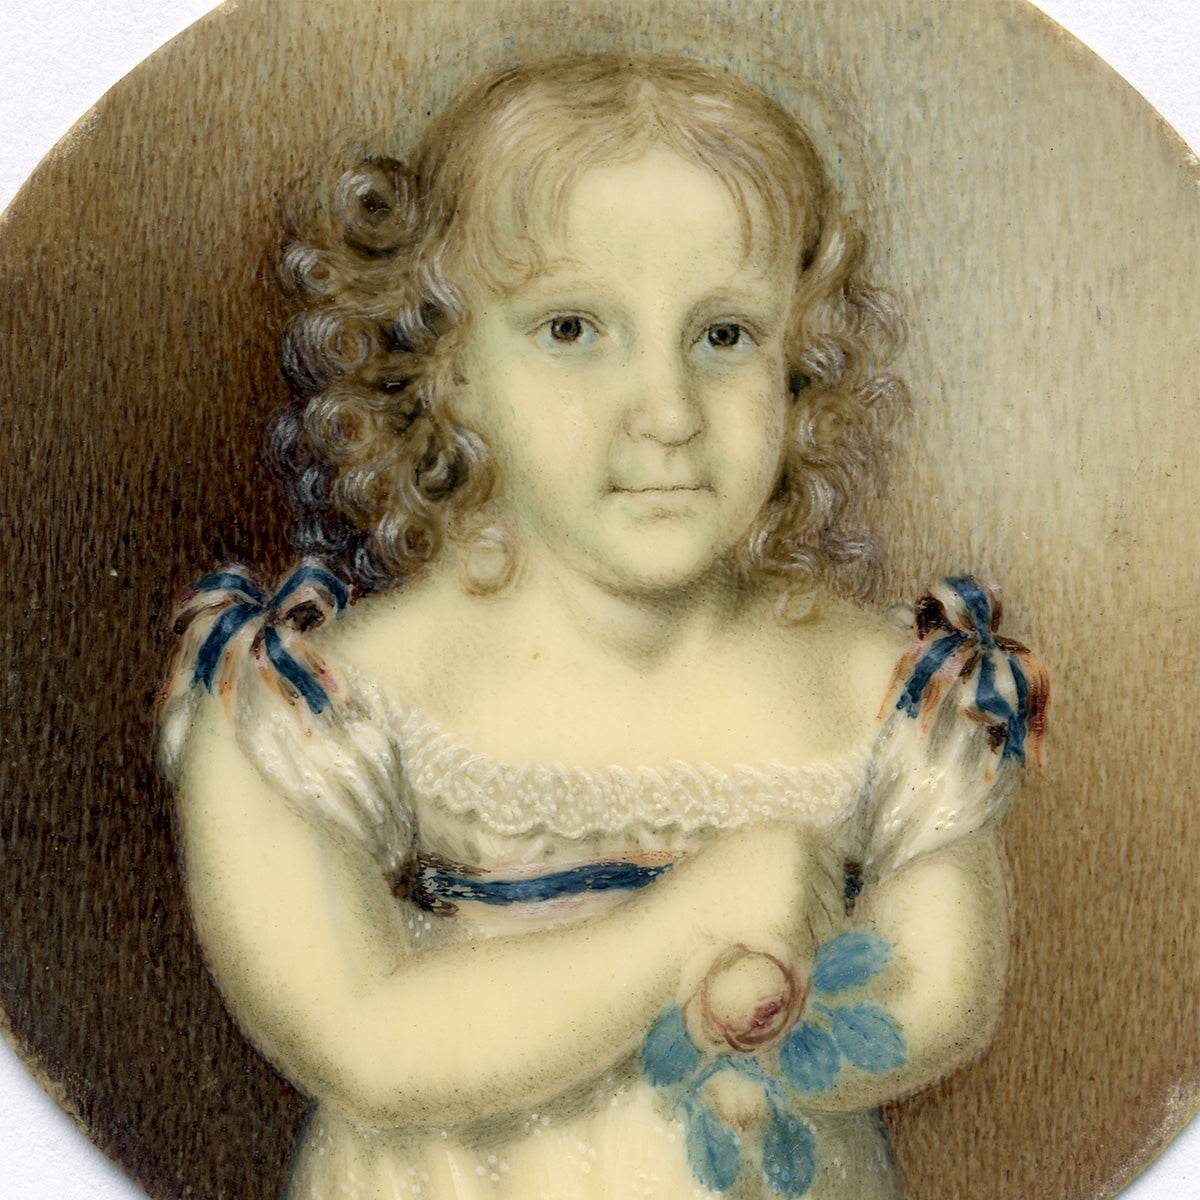 RARE Antique French Empire Era Portrait Miniature of a Dwarf, Not a Child, c.1800